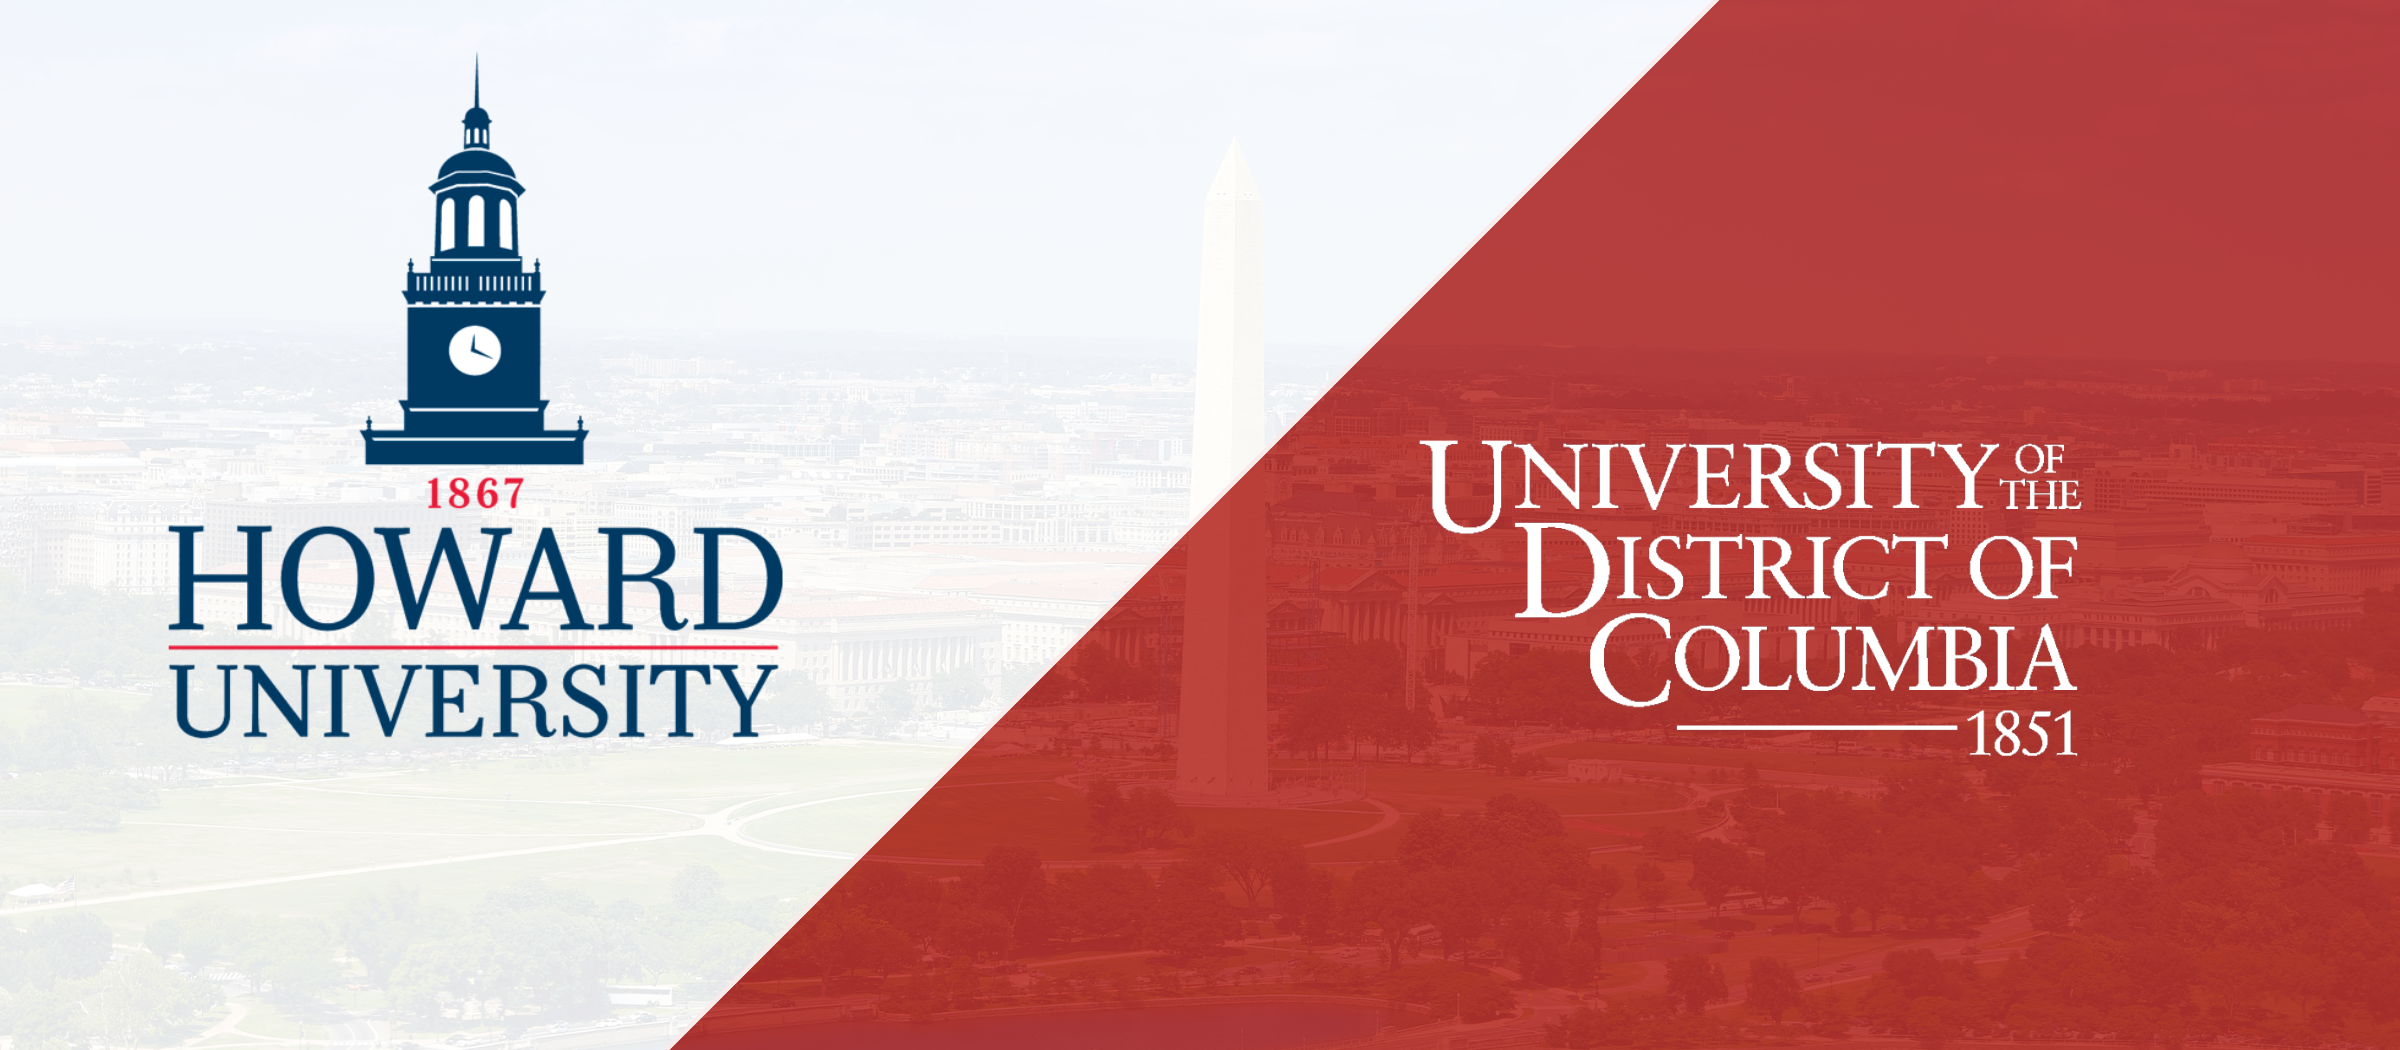 New partnership between Howard University and UDC